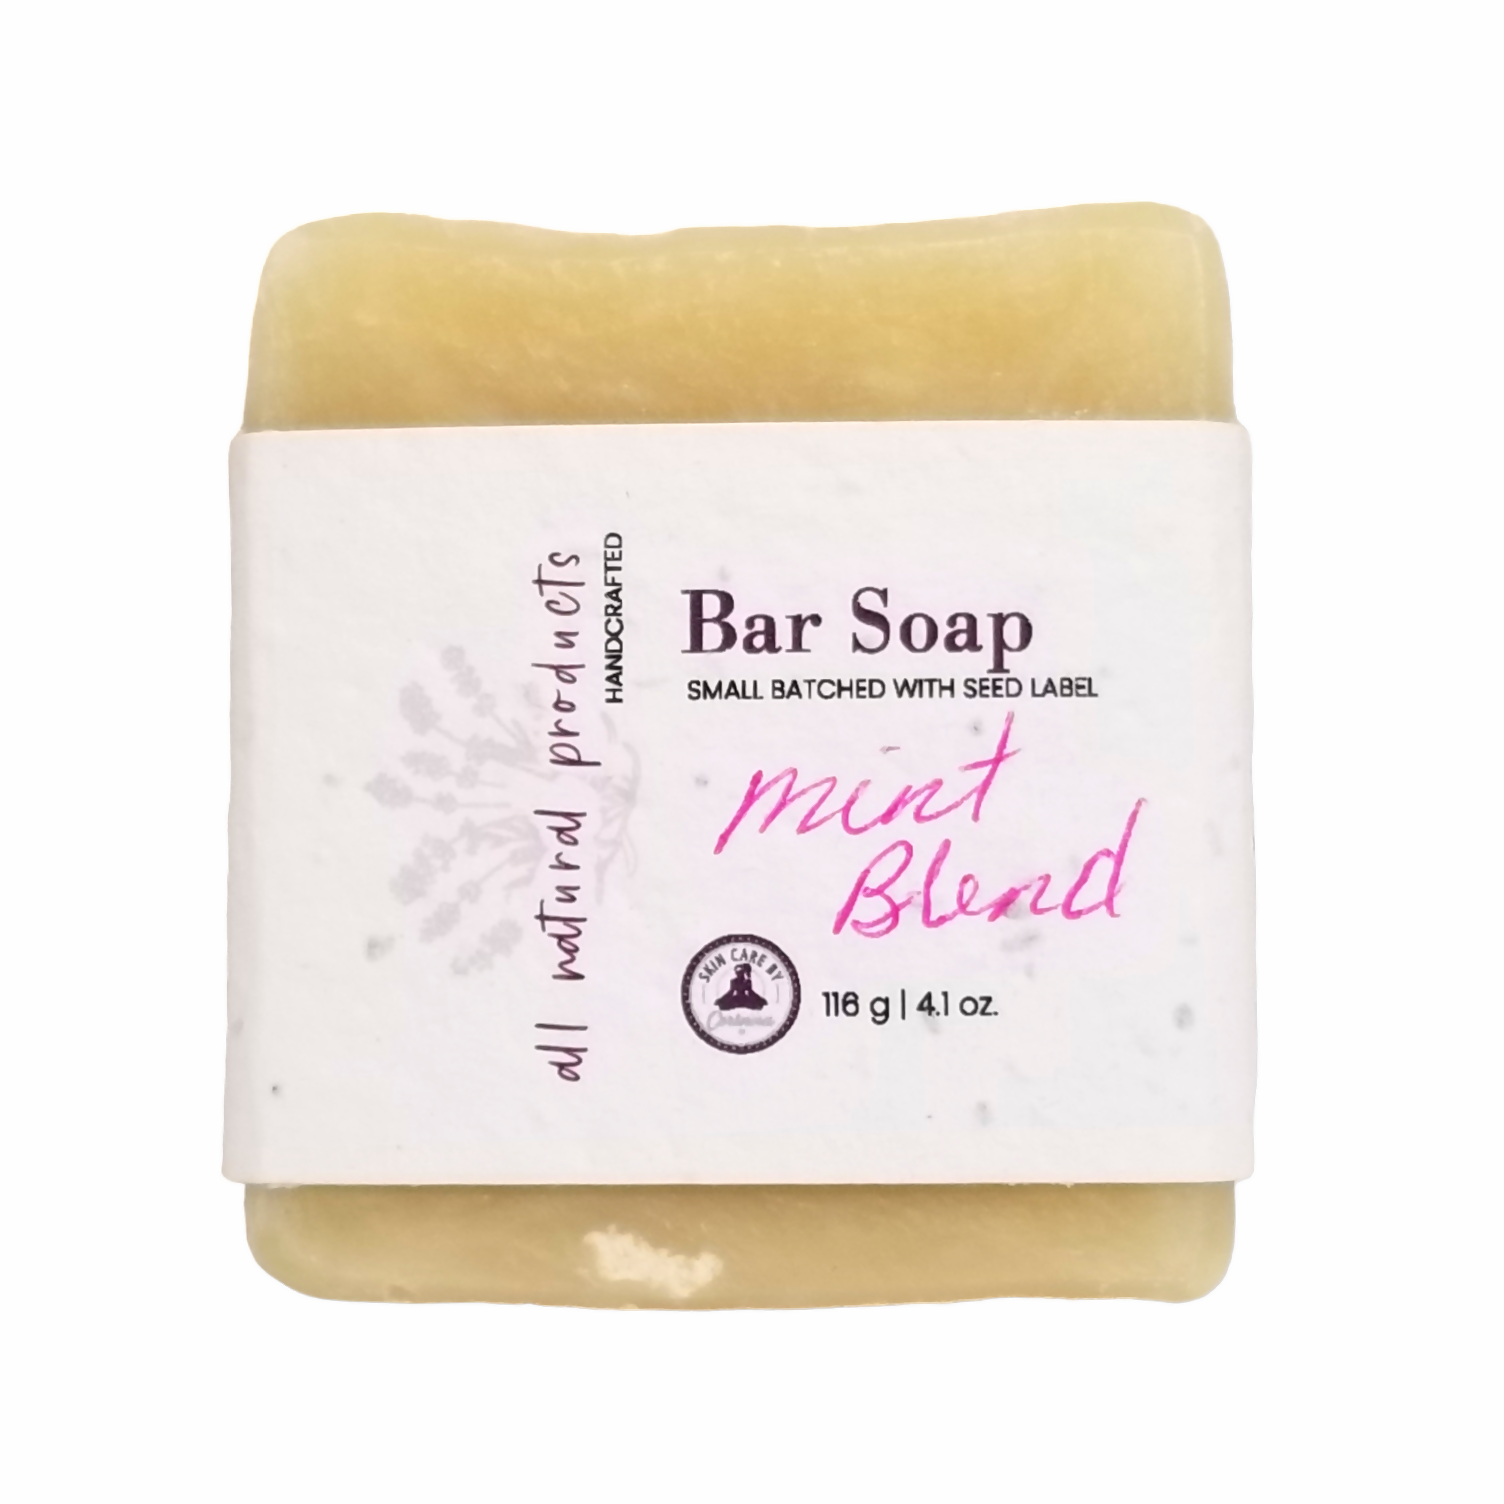 Mint Blend Bar Soap